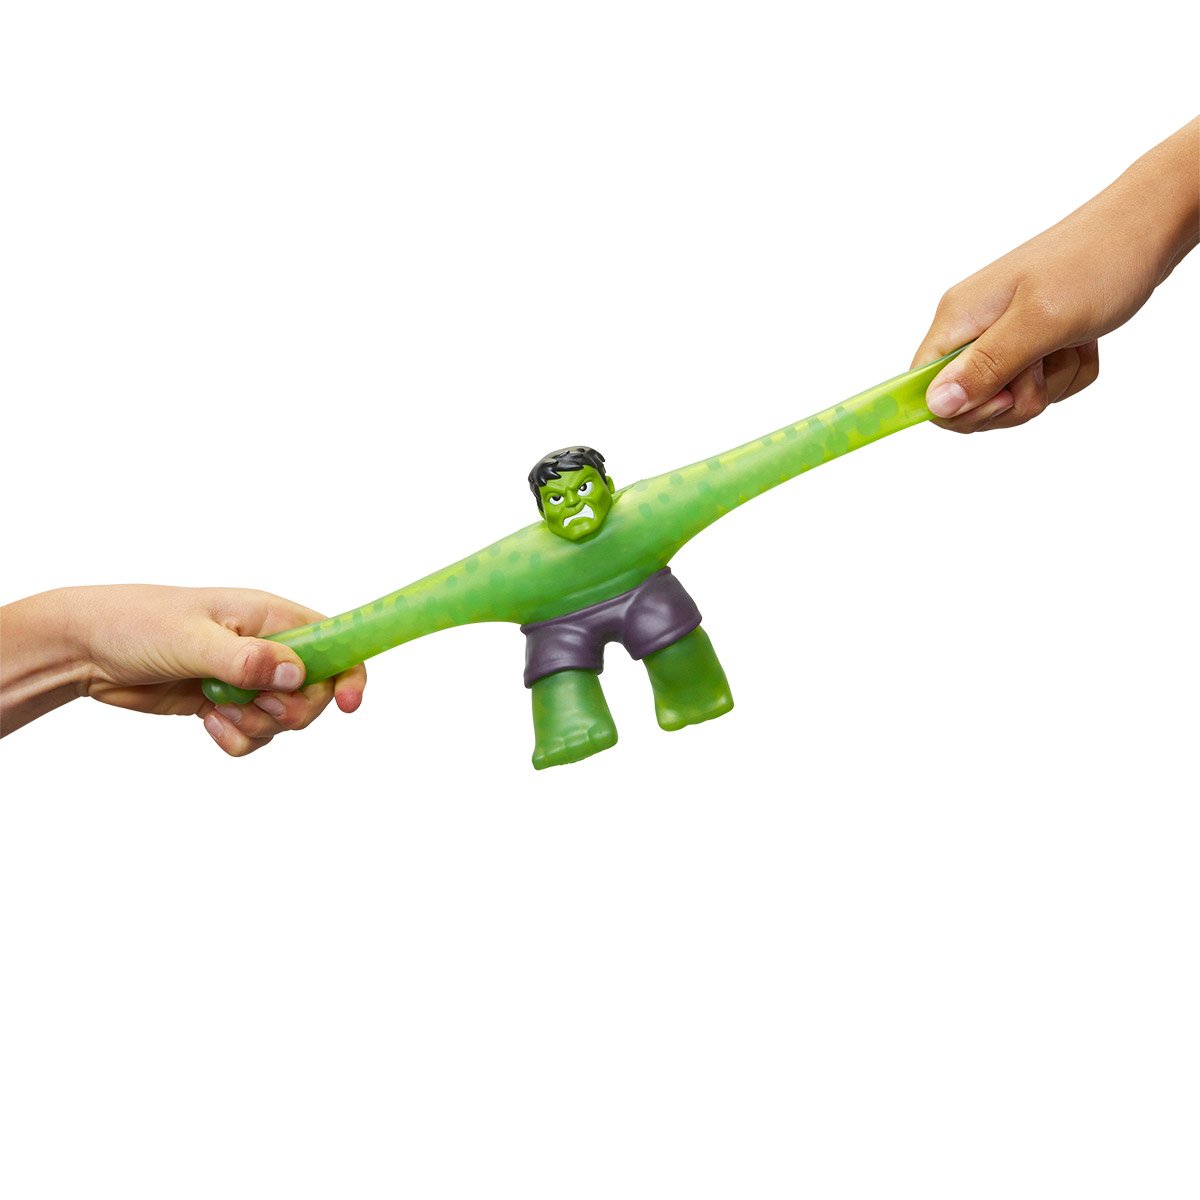 Figurine Hulk 11 cm - Go Jit Zu Marvel - La Grande Récré